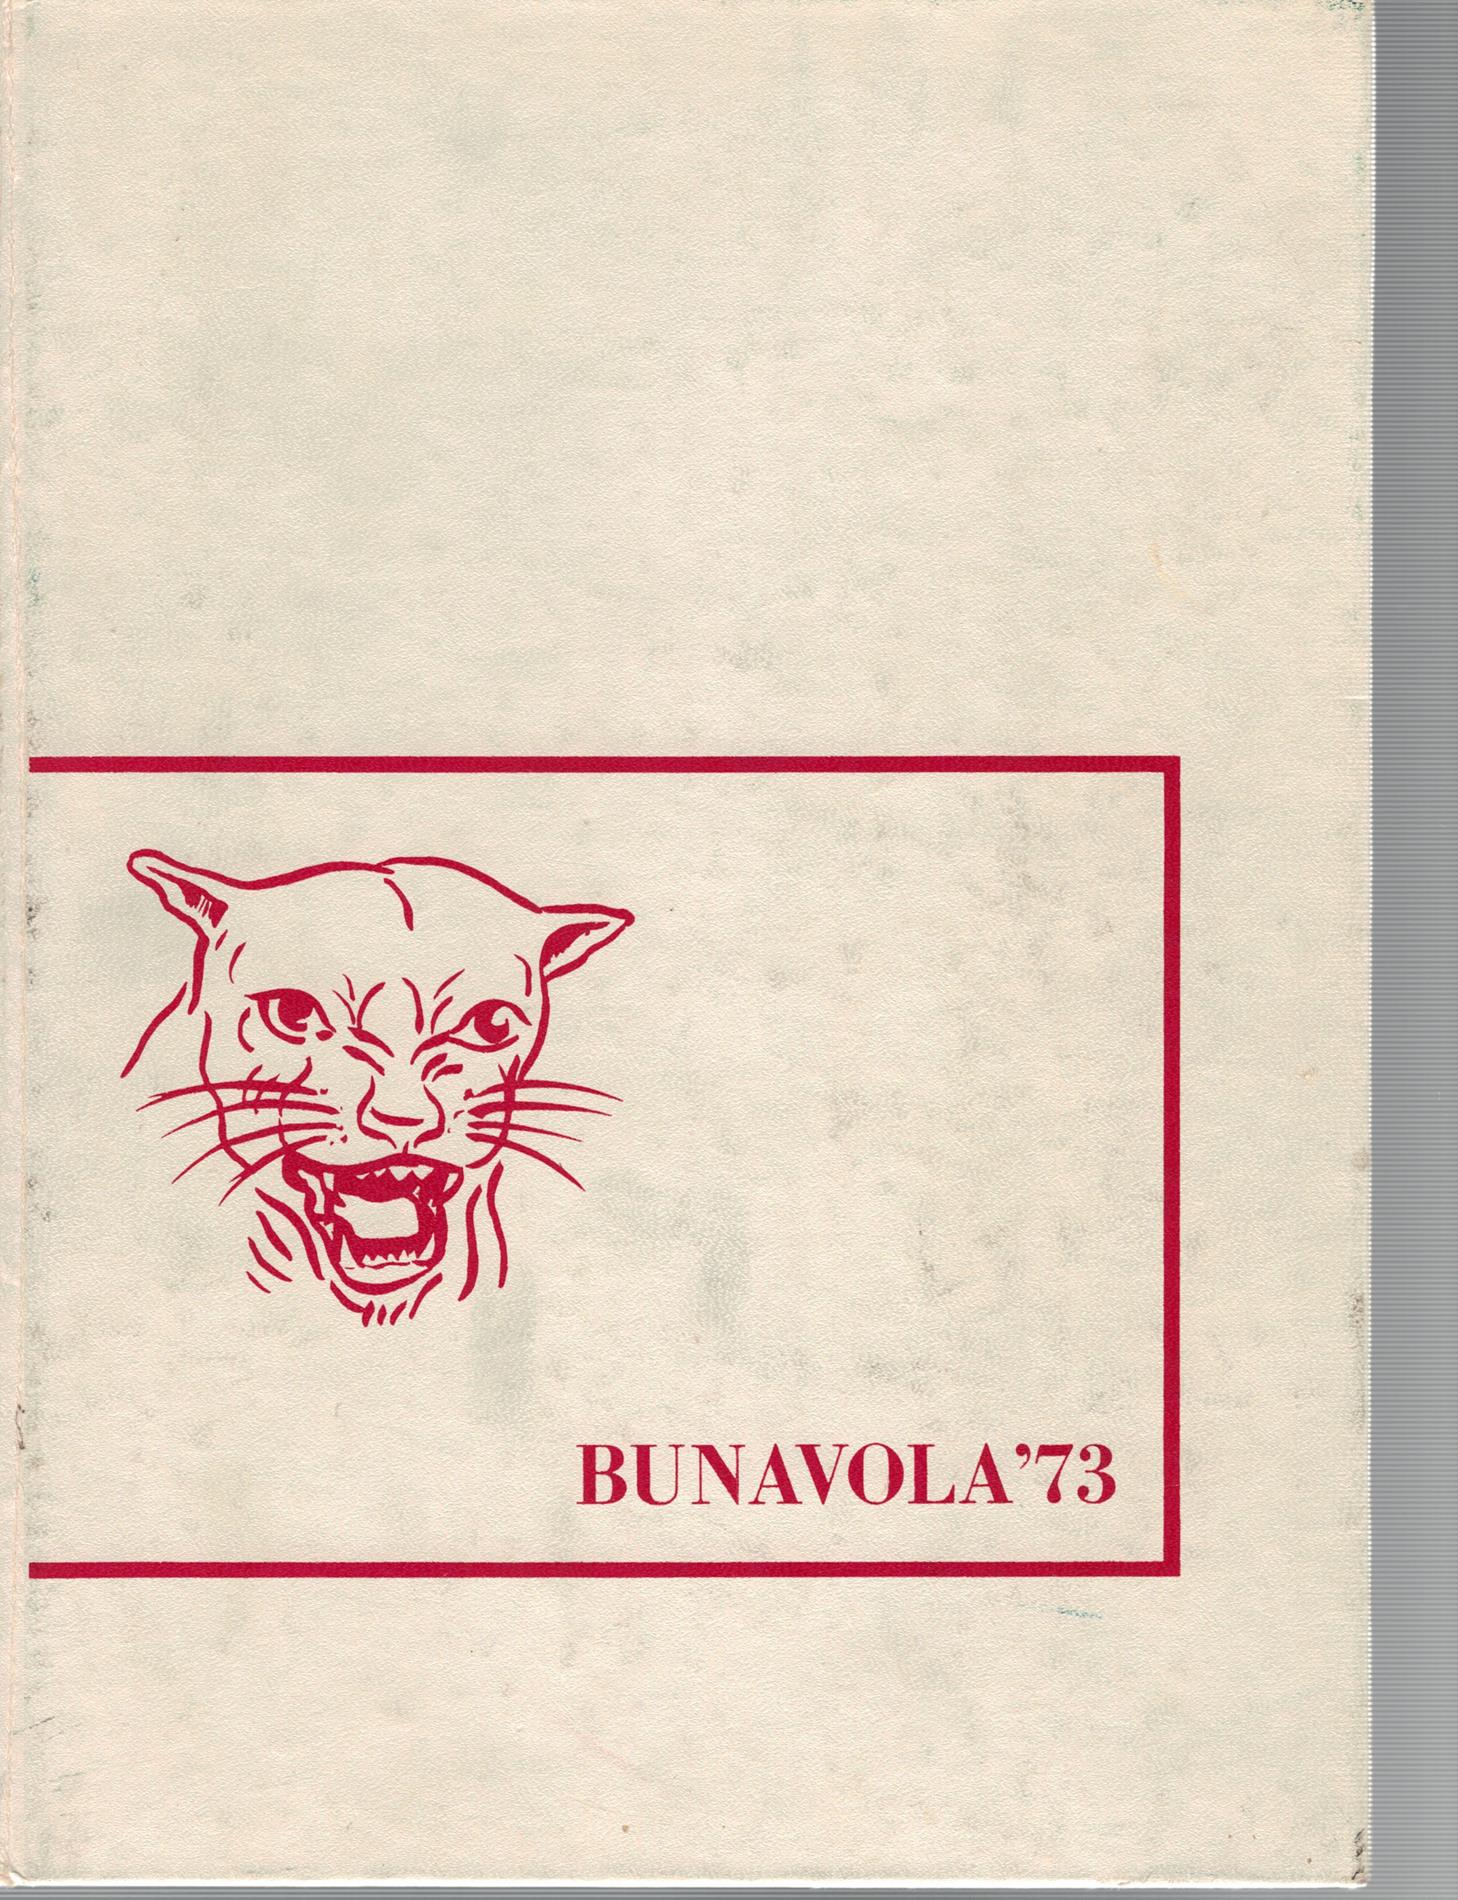 1973 Bunavola